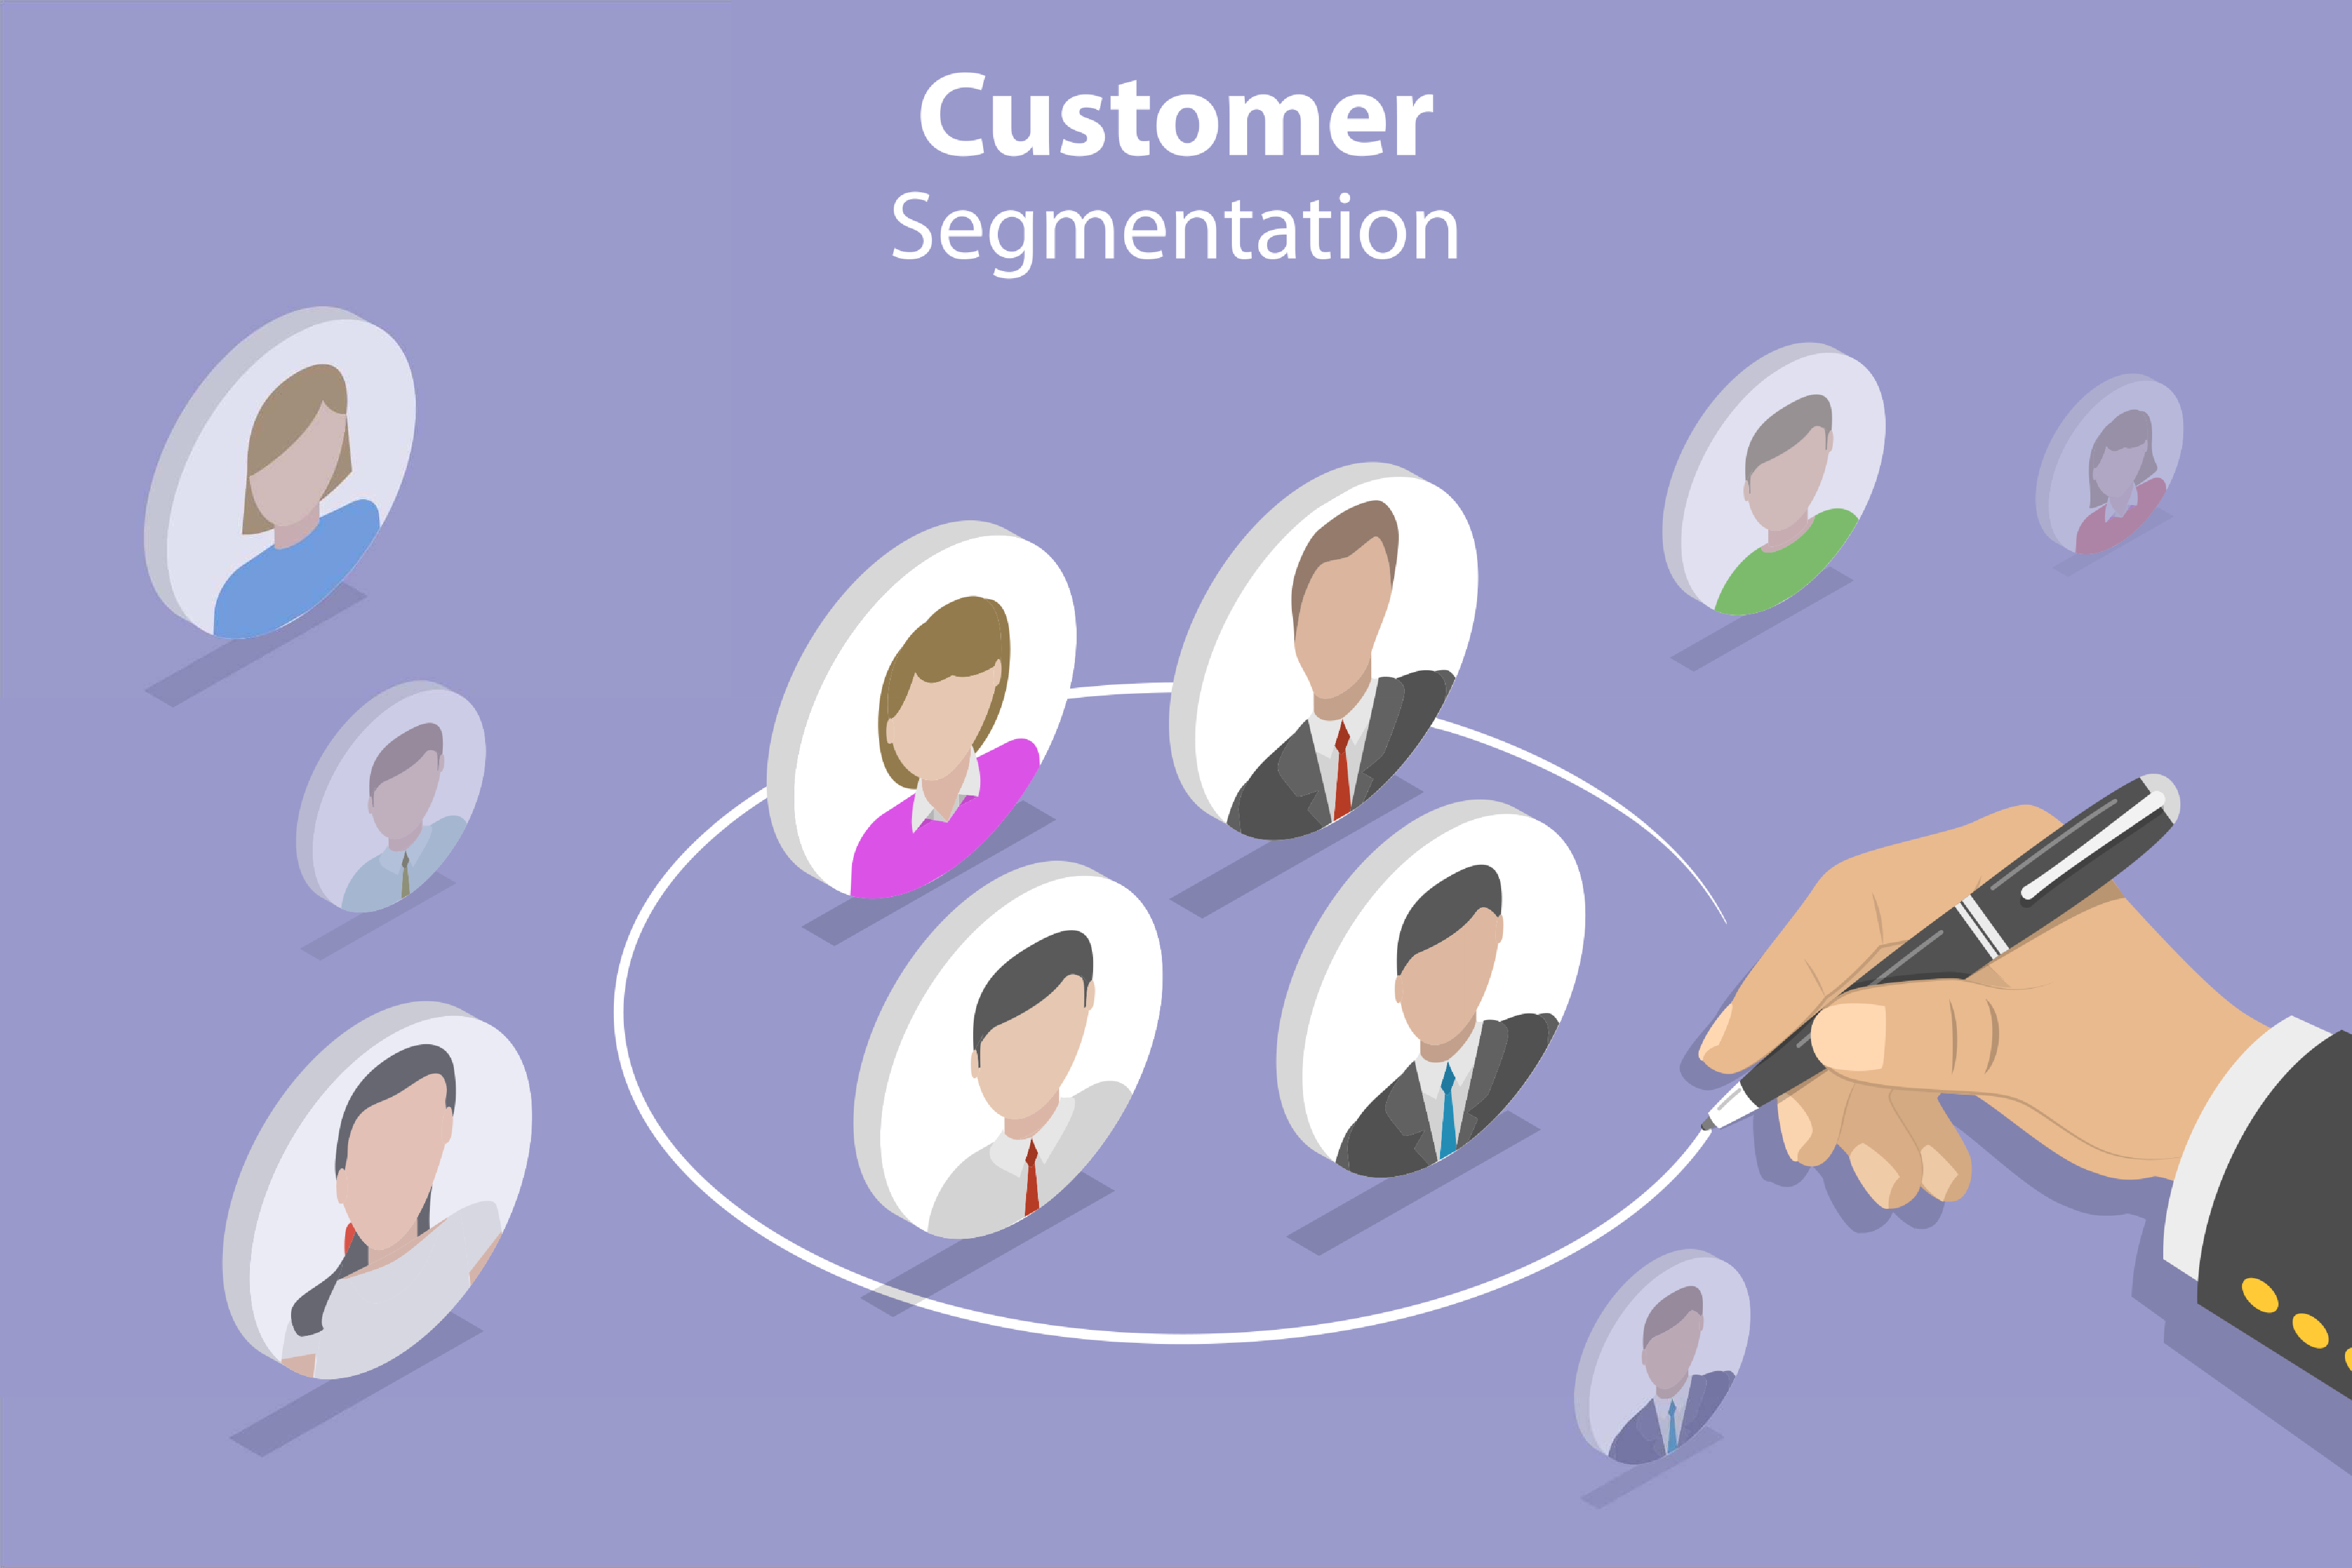 Benefits of customer segmentation